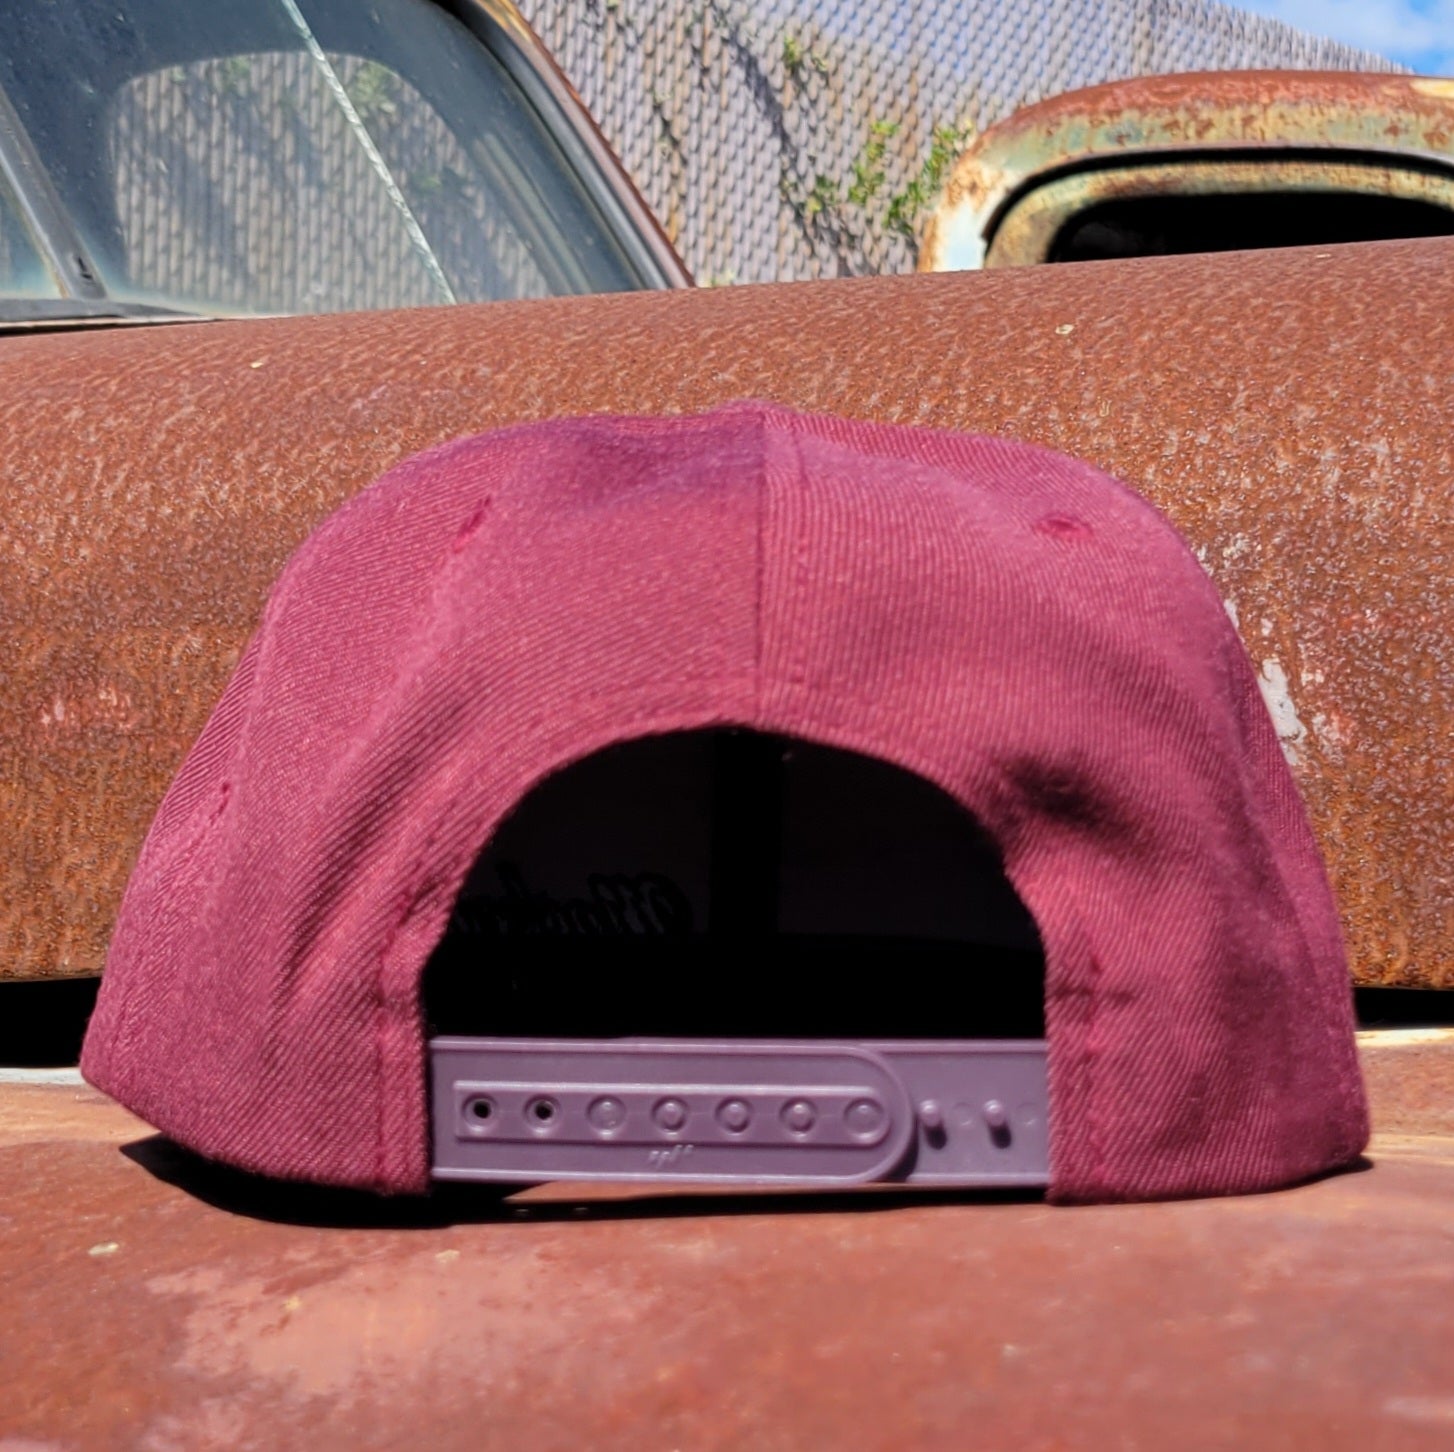 MHR Snapback Hat - Maroon